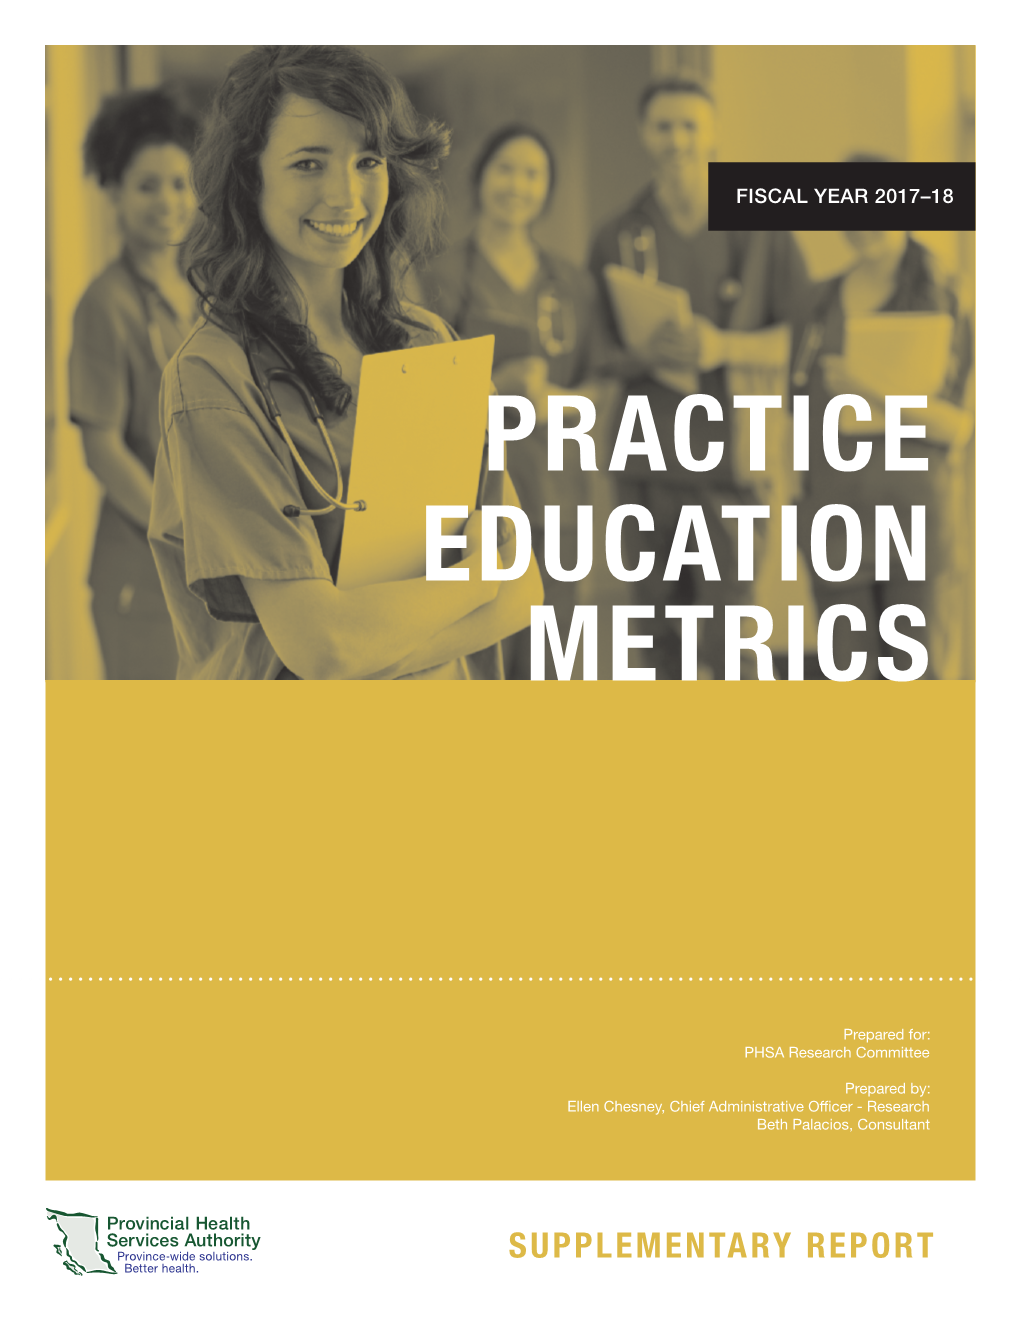 Practice Education Metrics Supplementary Report 2017/18